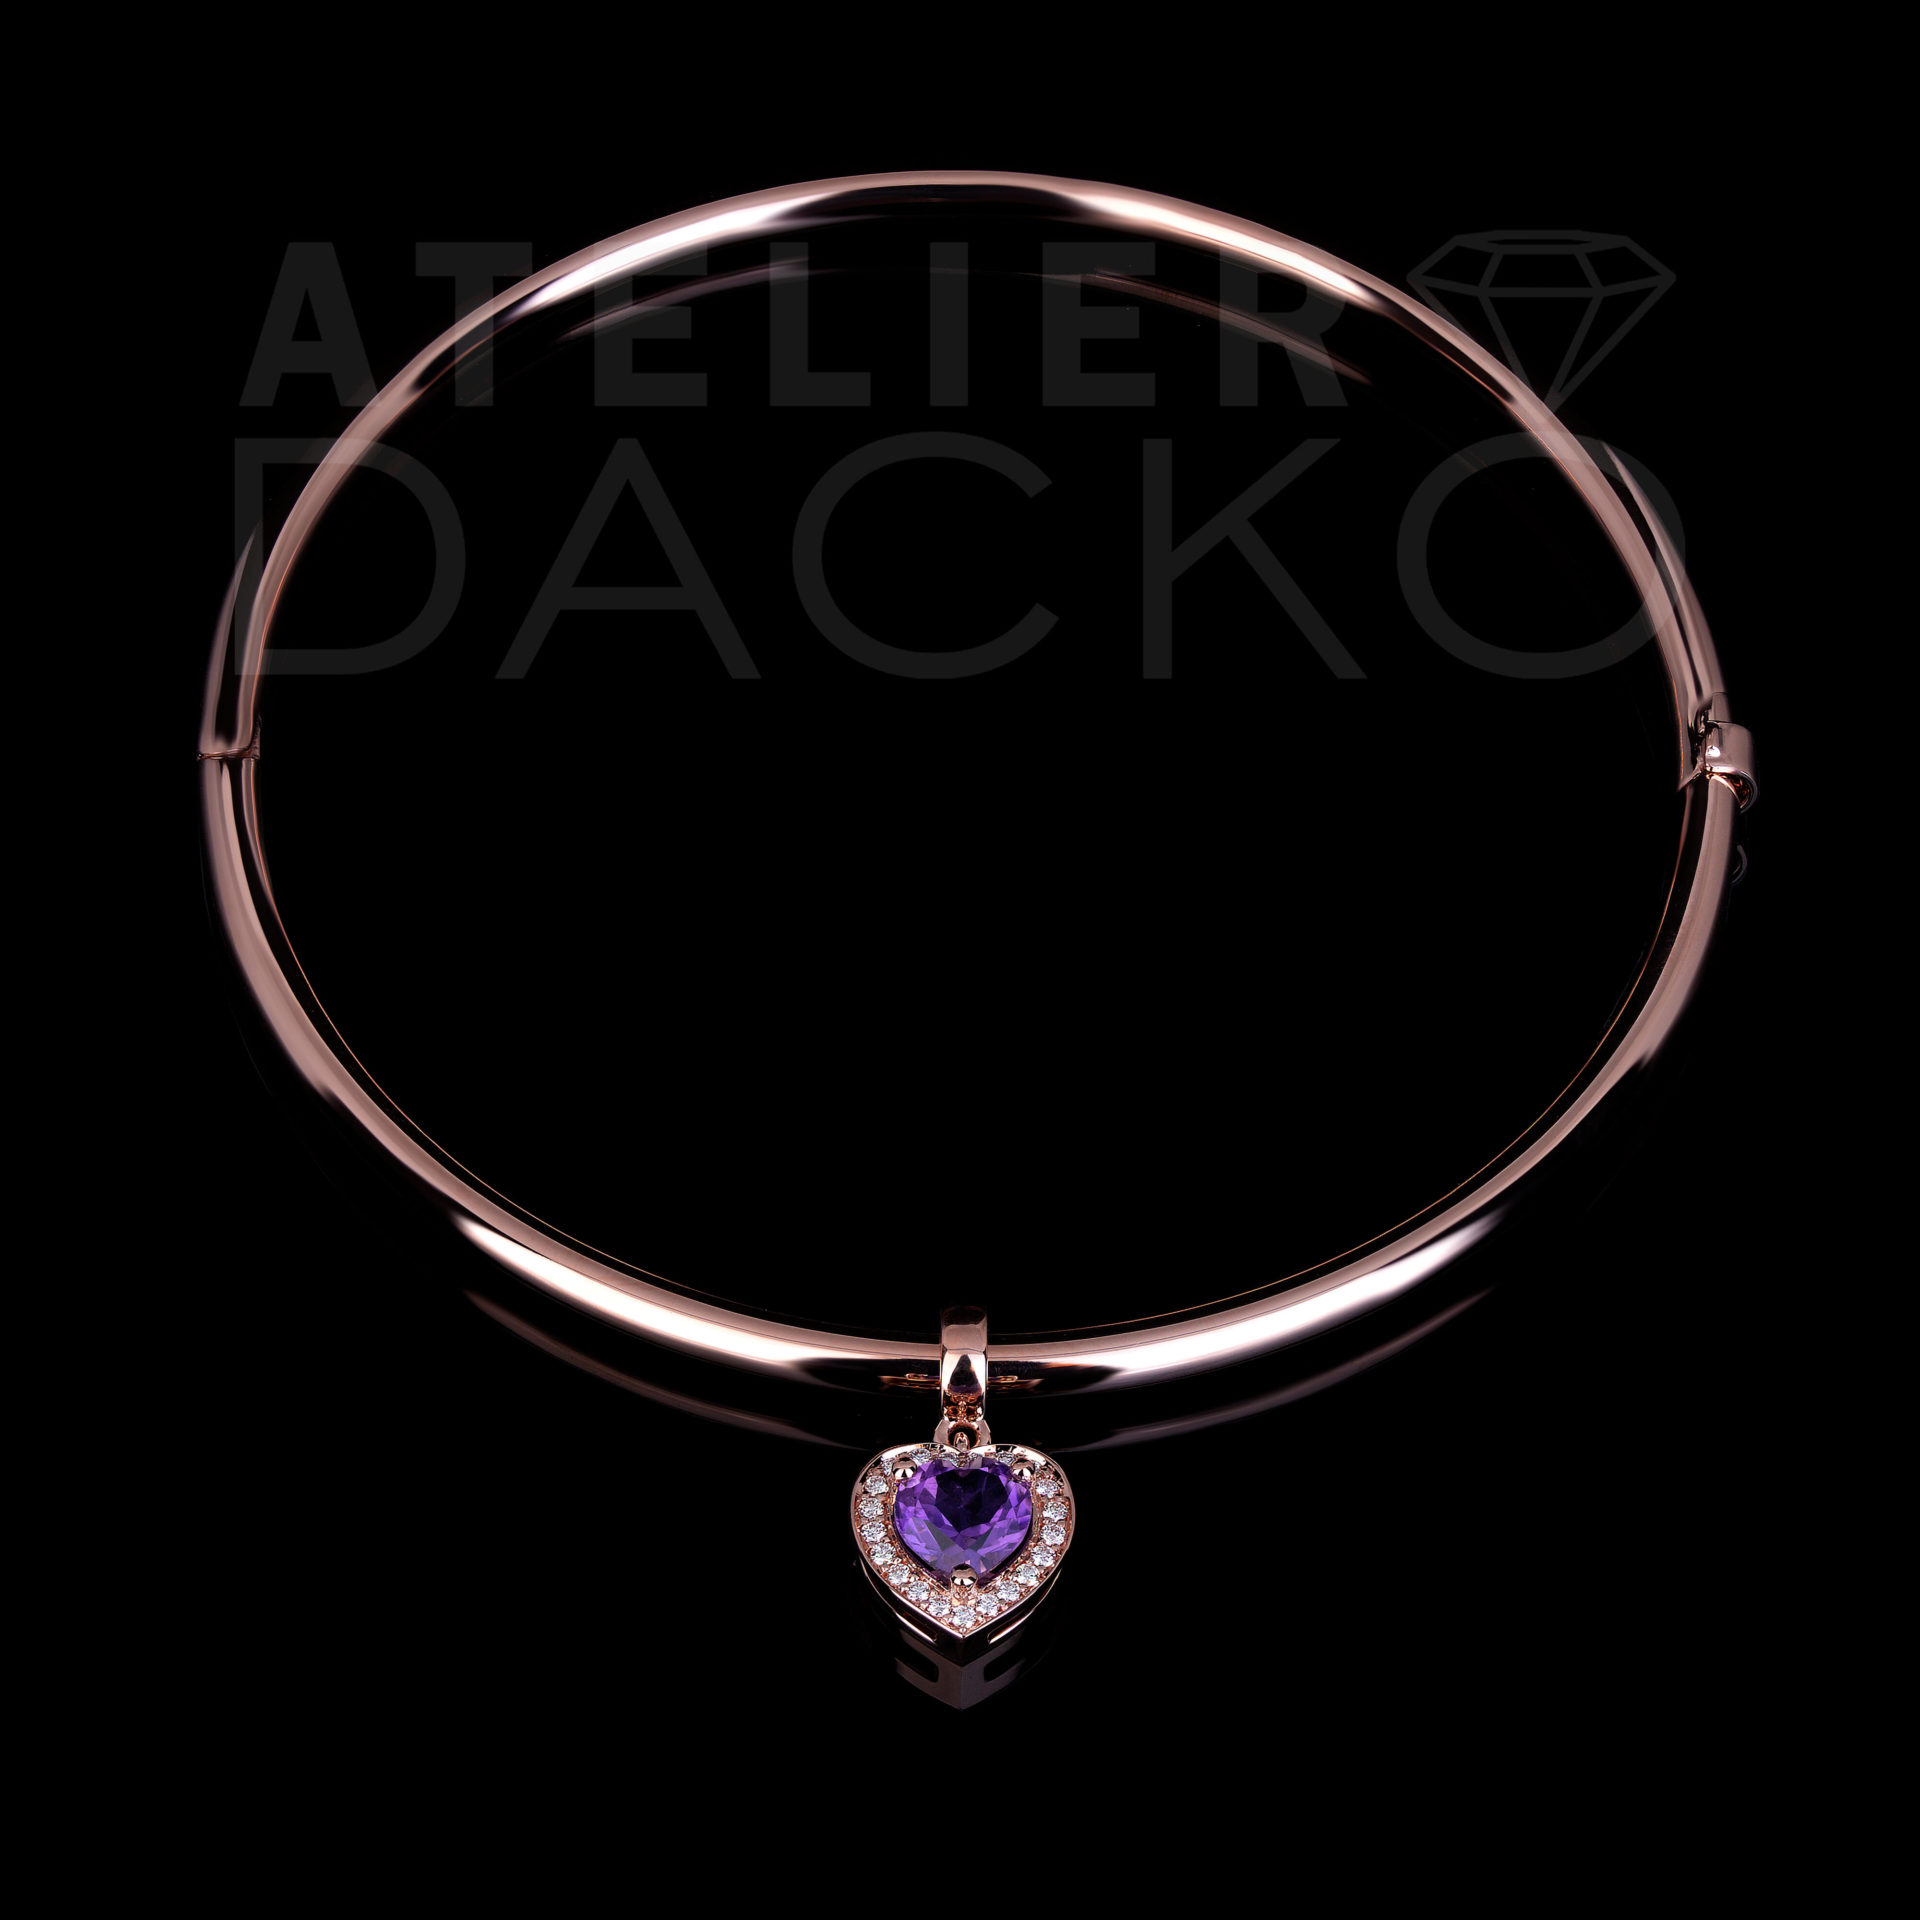 Rose gold bangle bracelet with heart shaped amethyst charm